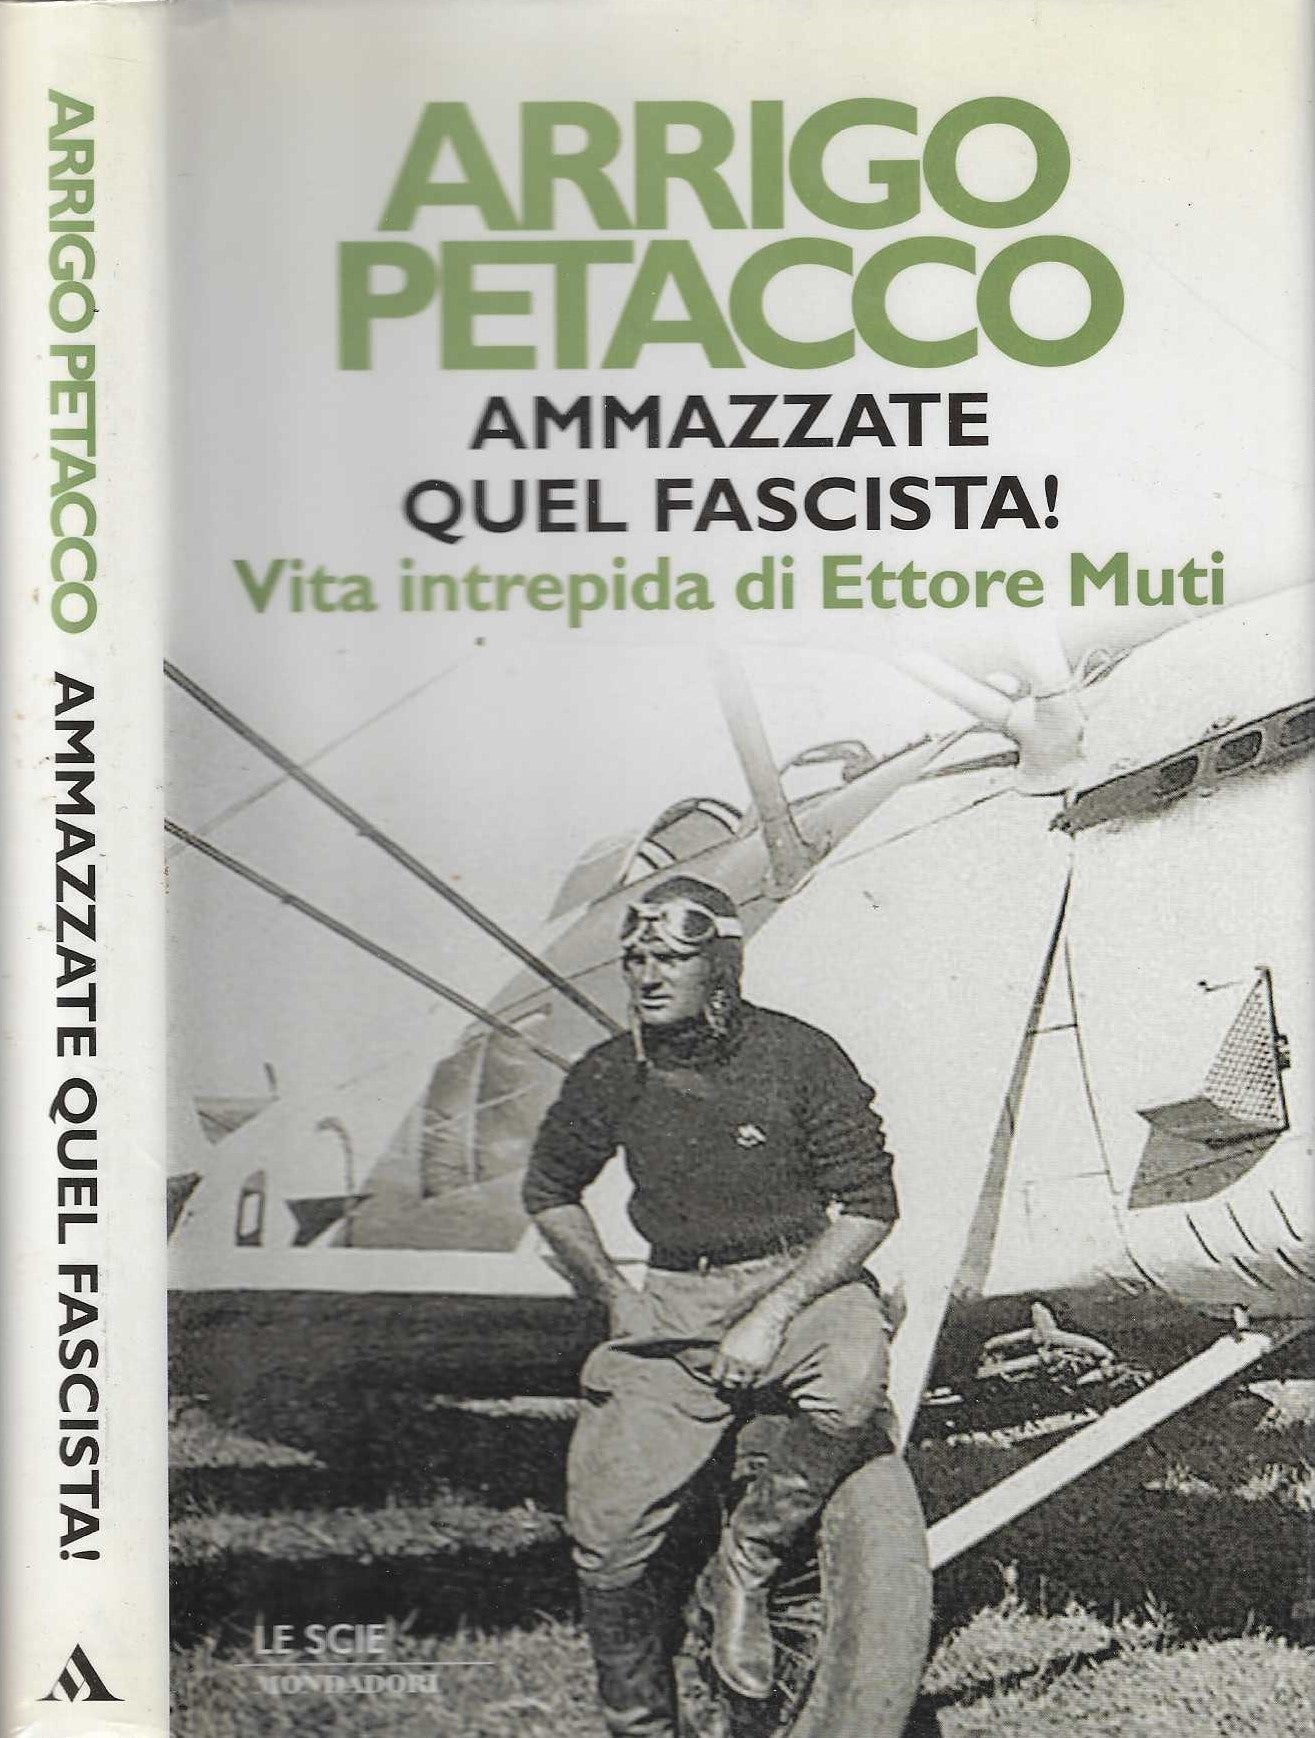 Ammazzate quel fascista! Vita intrepida di Ettore Muti - Arrigo Petacco